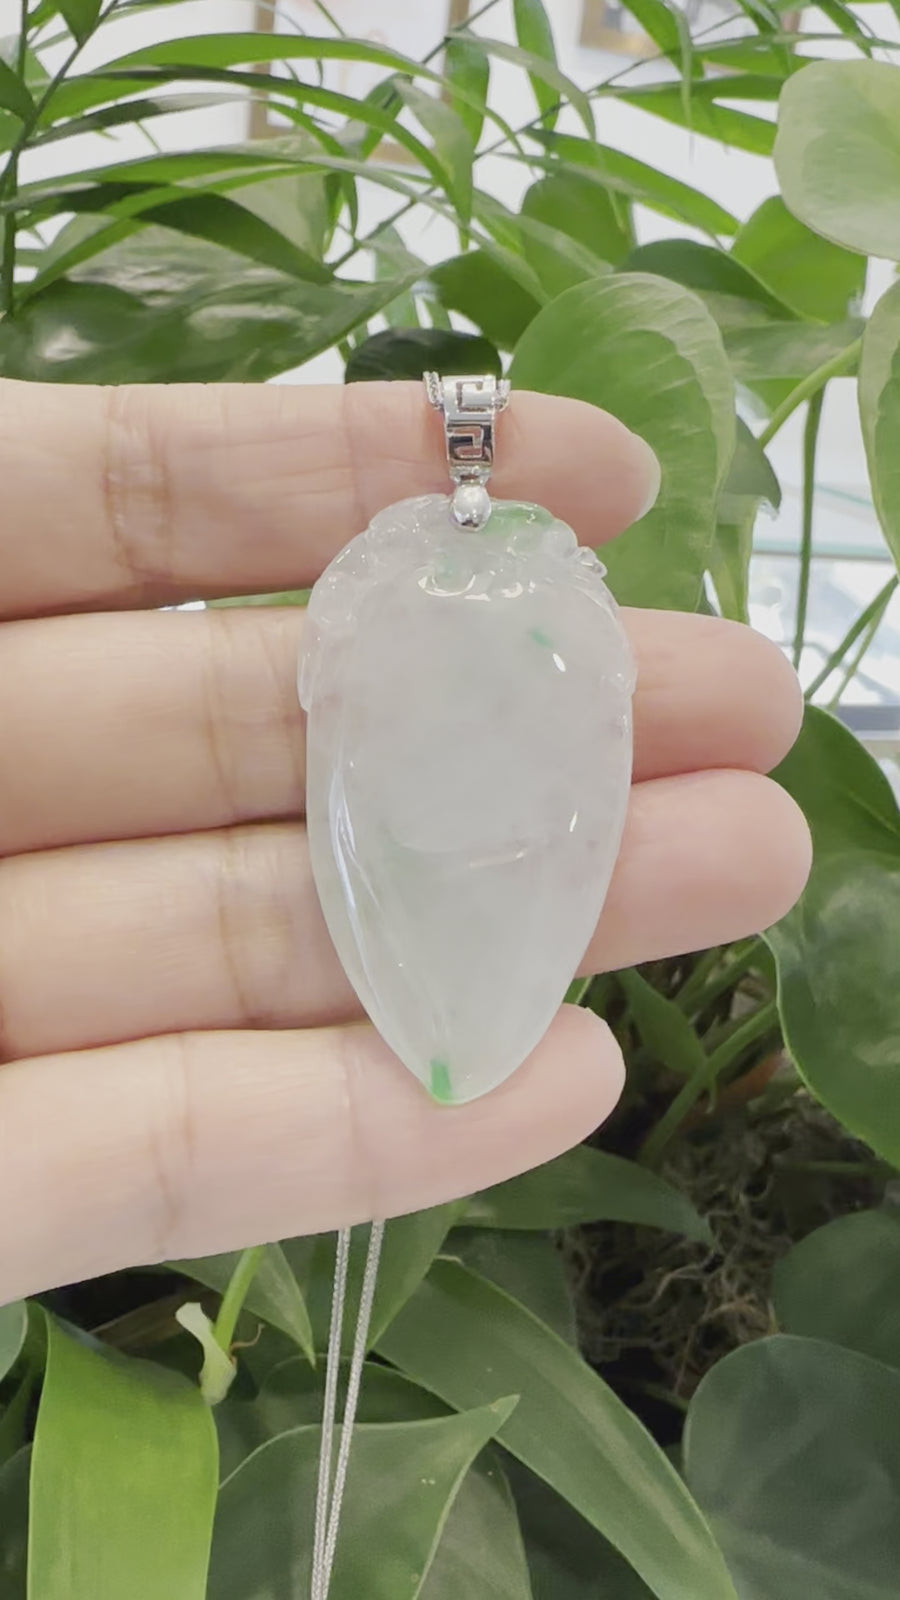 Natural Ice Green Jadeite Jade Shou Tao ( Longevity Peach ) Necklace With 14k White Gold Bail